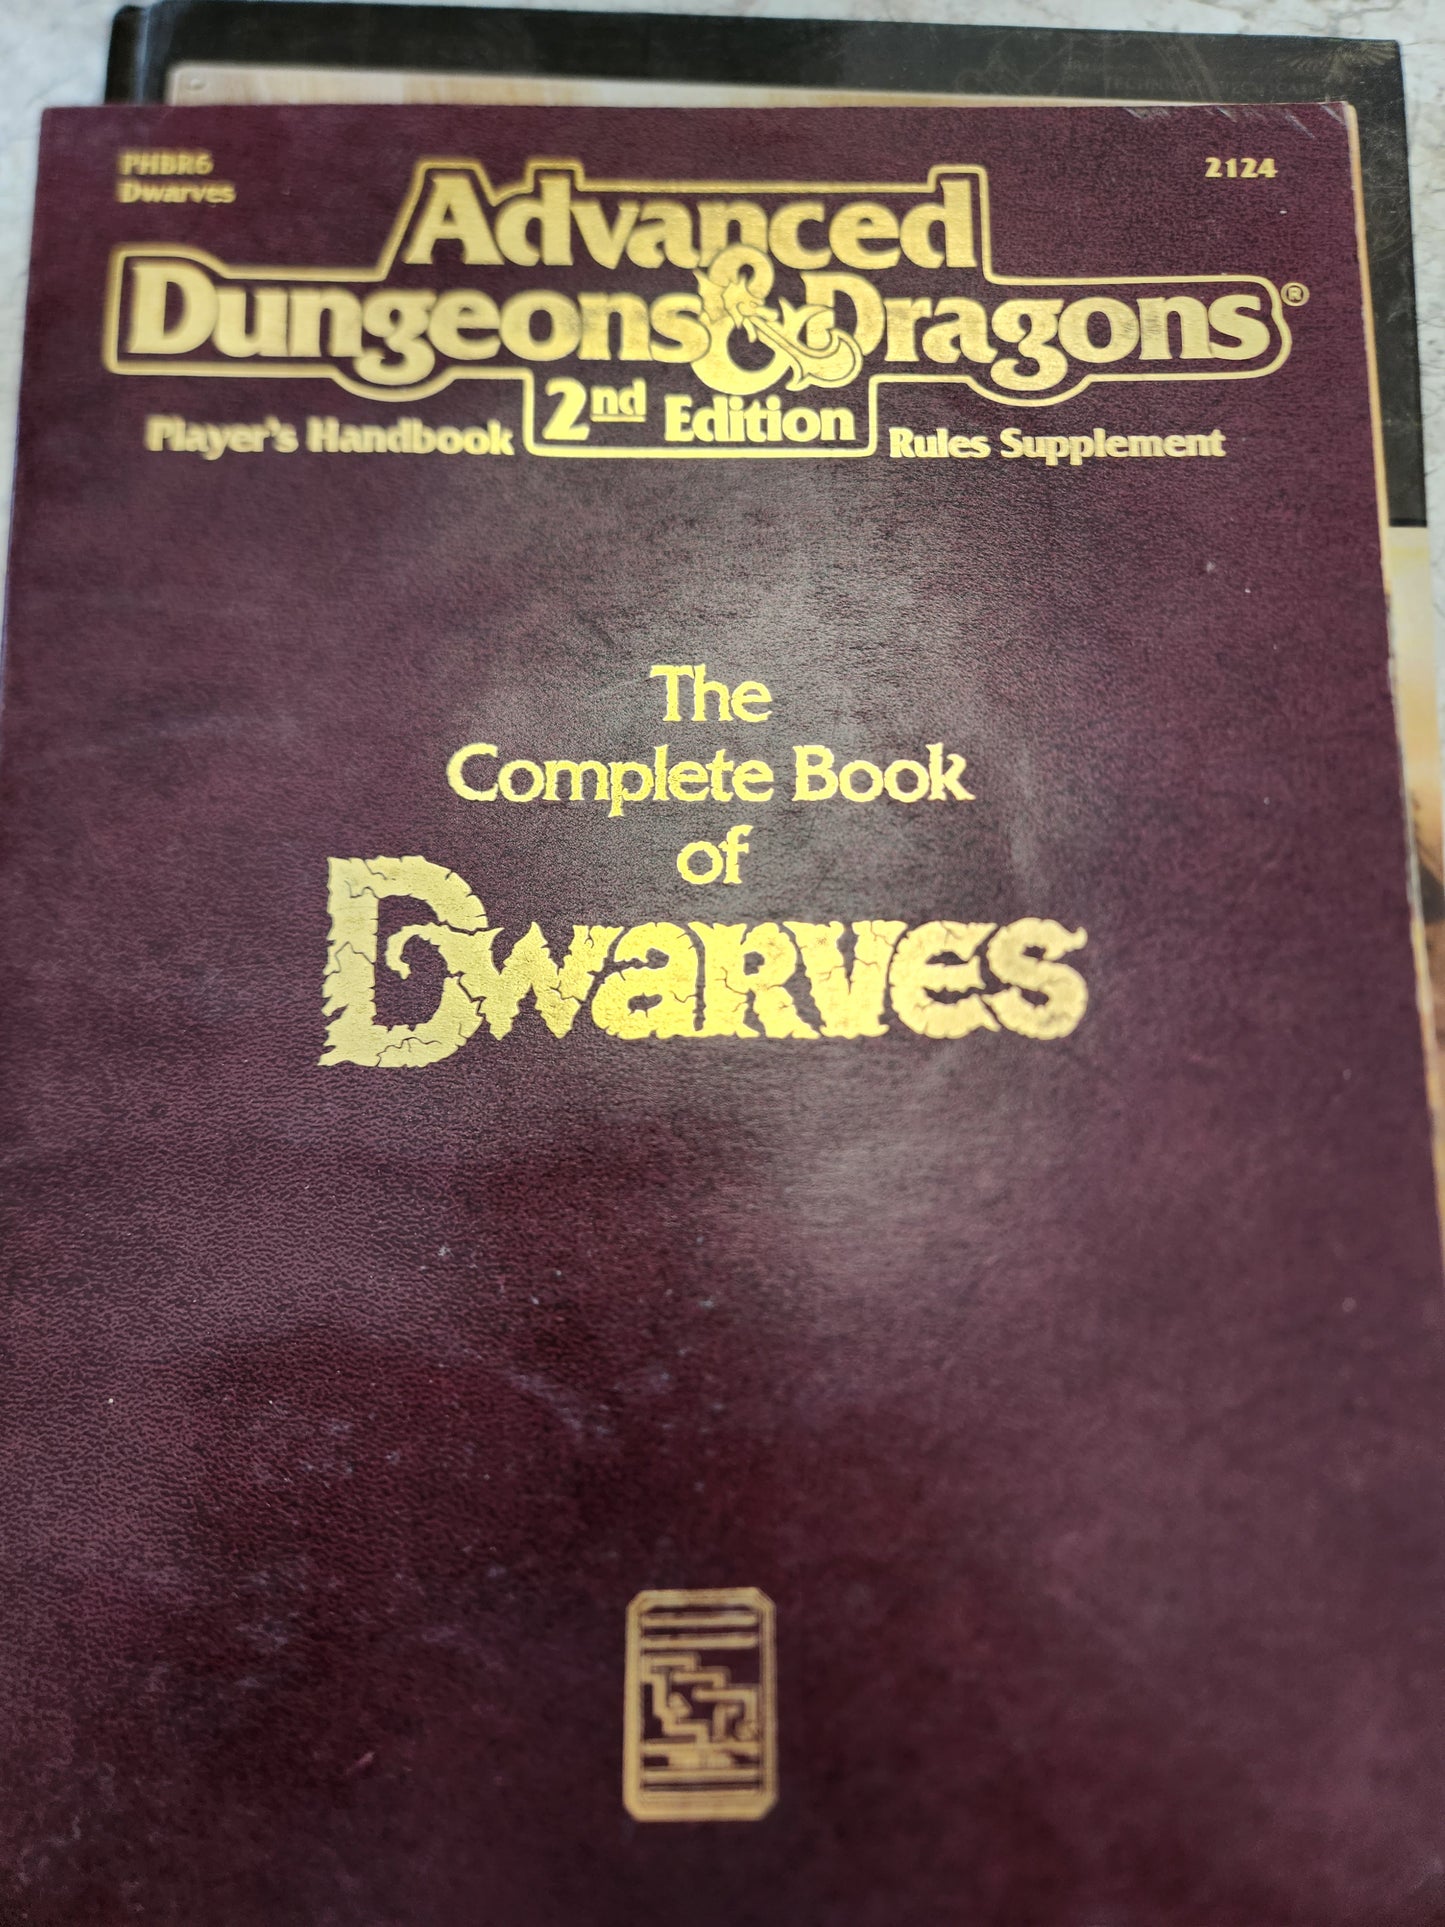 THE COMPLETE BOOK OF DWARVES PHBR6 1991 Dungeons & Dragons Handbook